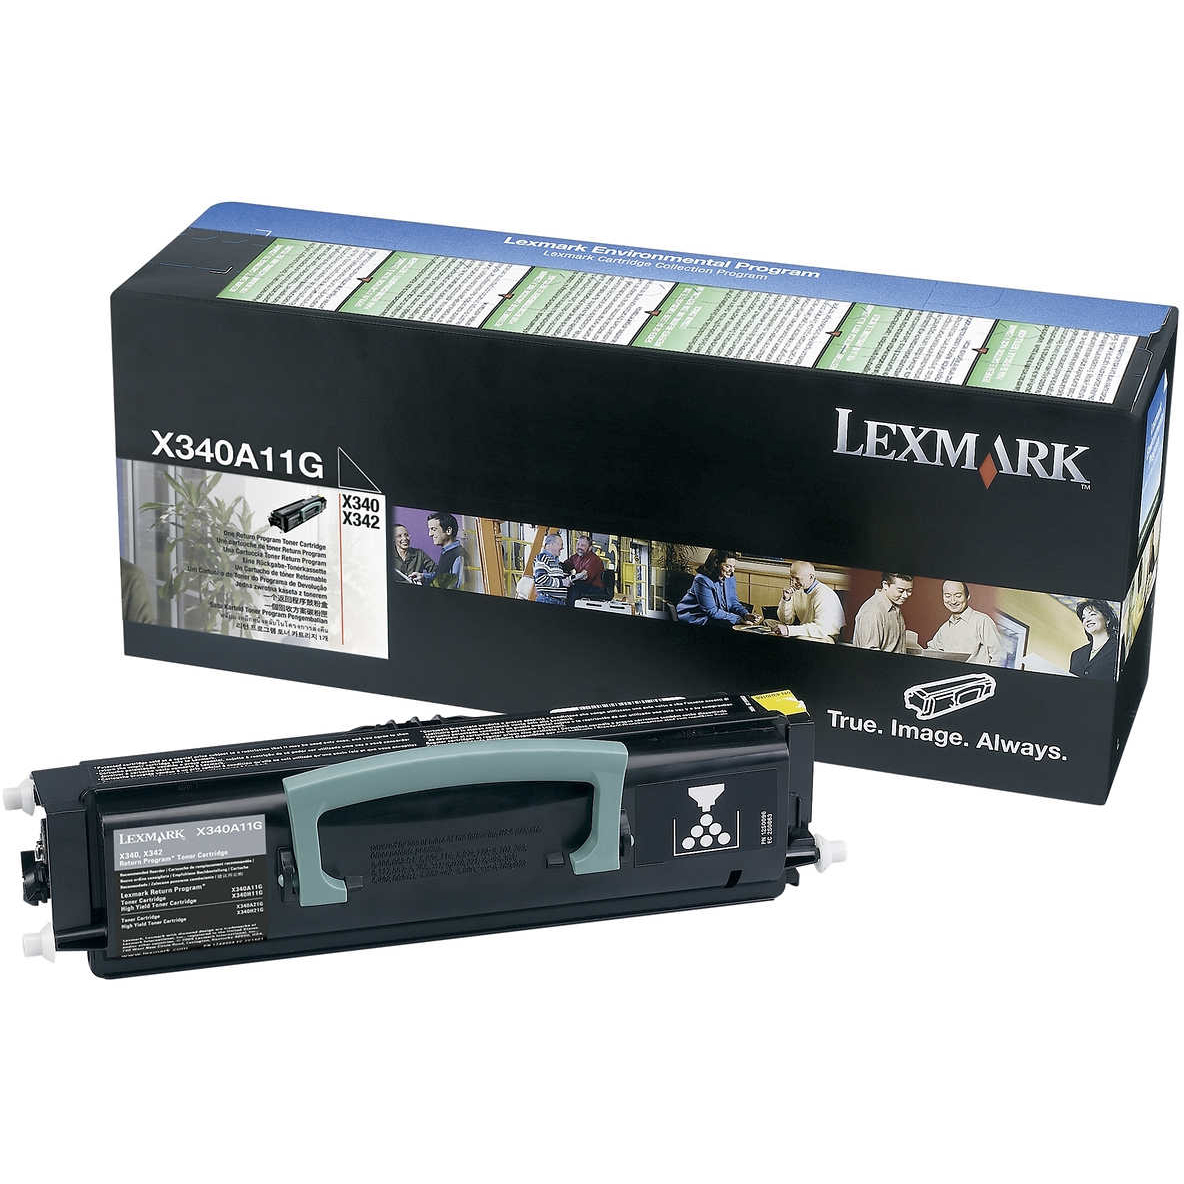 Original Lexmark X340A11G Black Toner Cartridge (X340A11G)